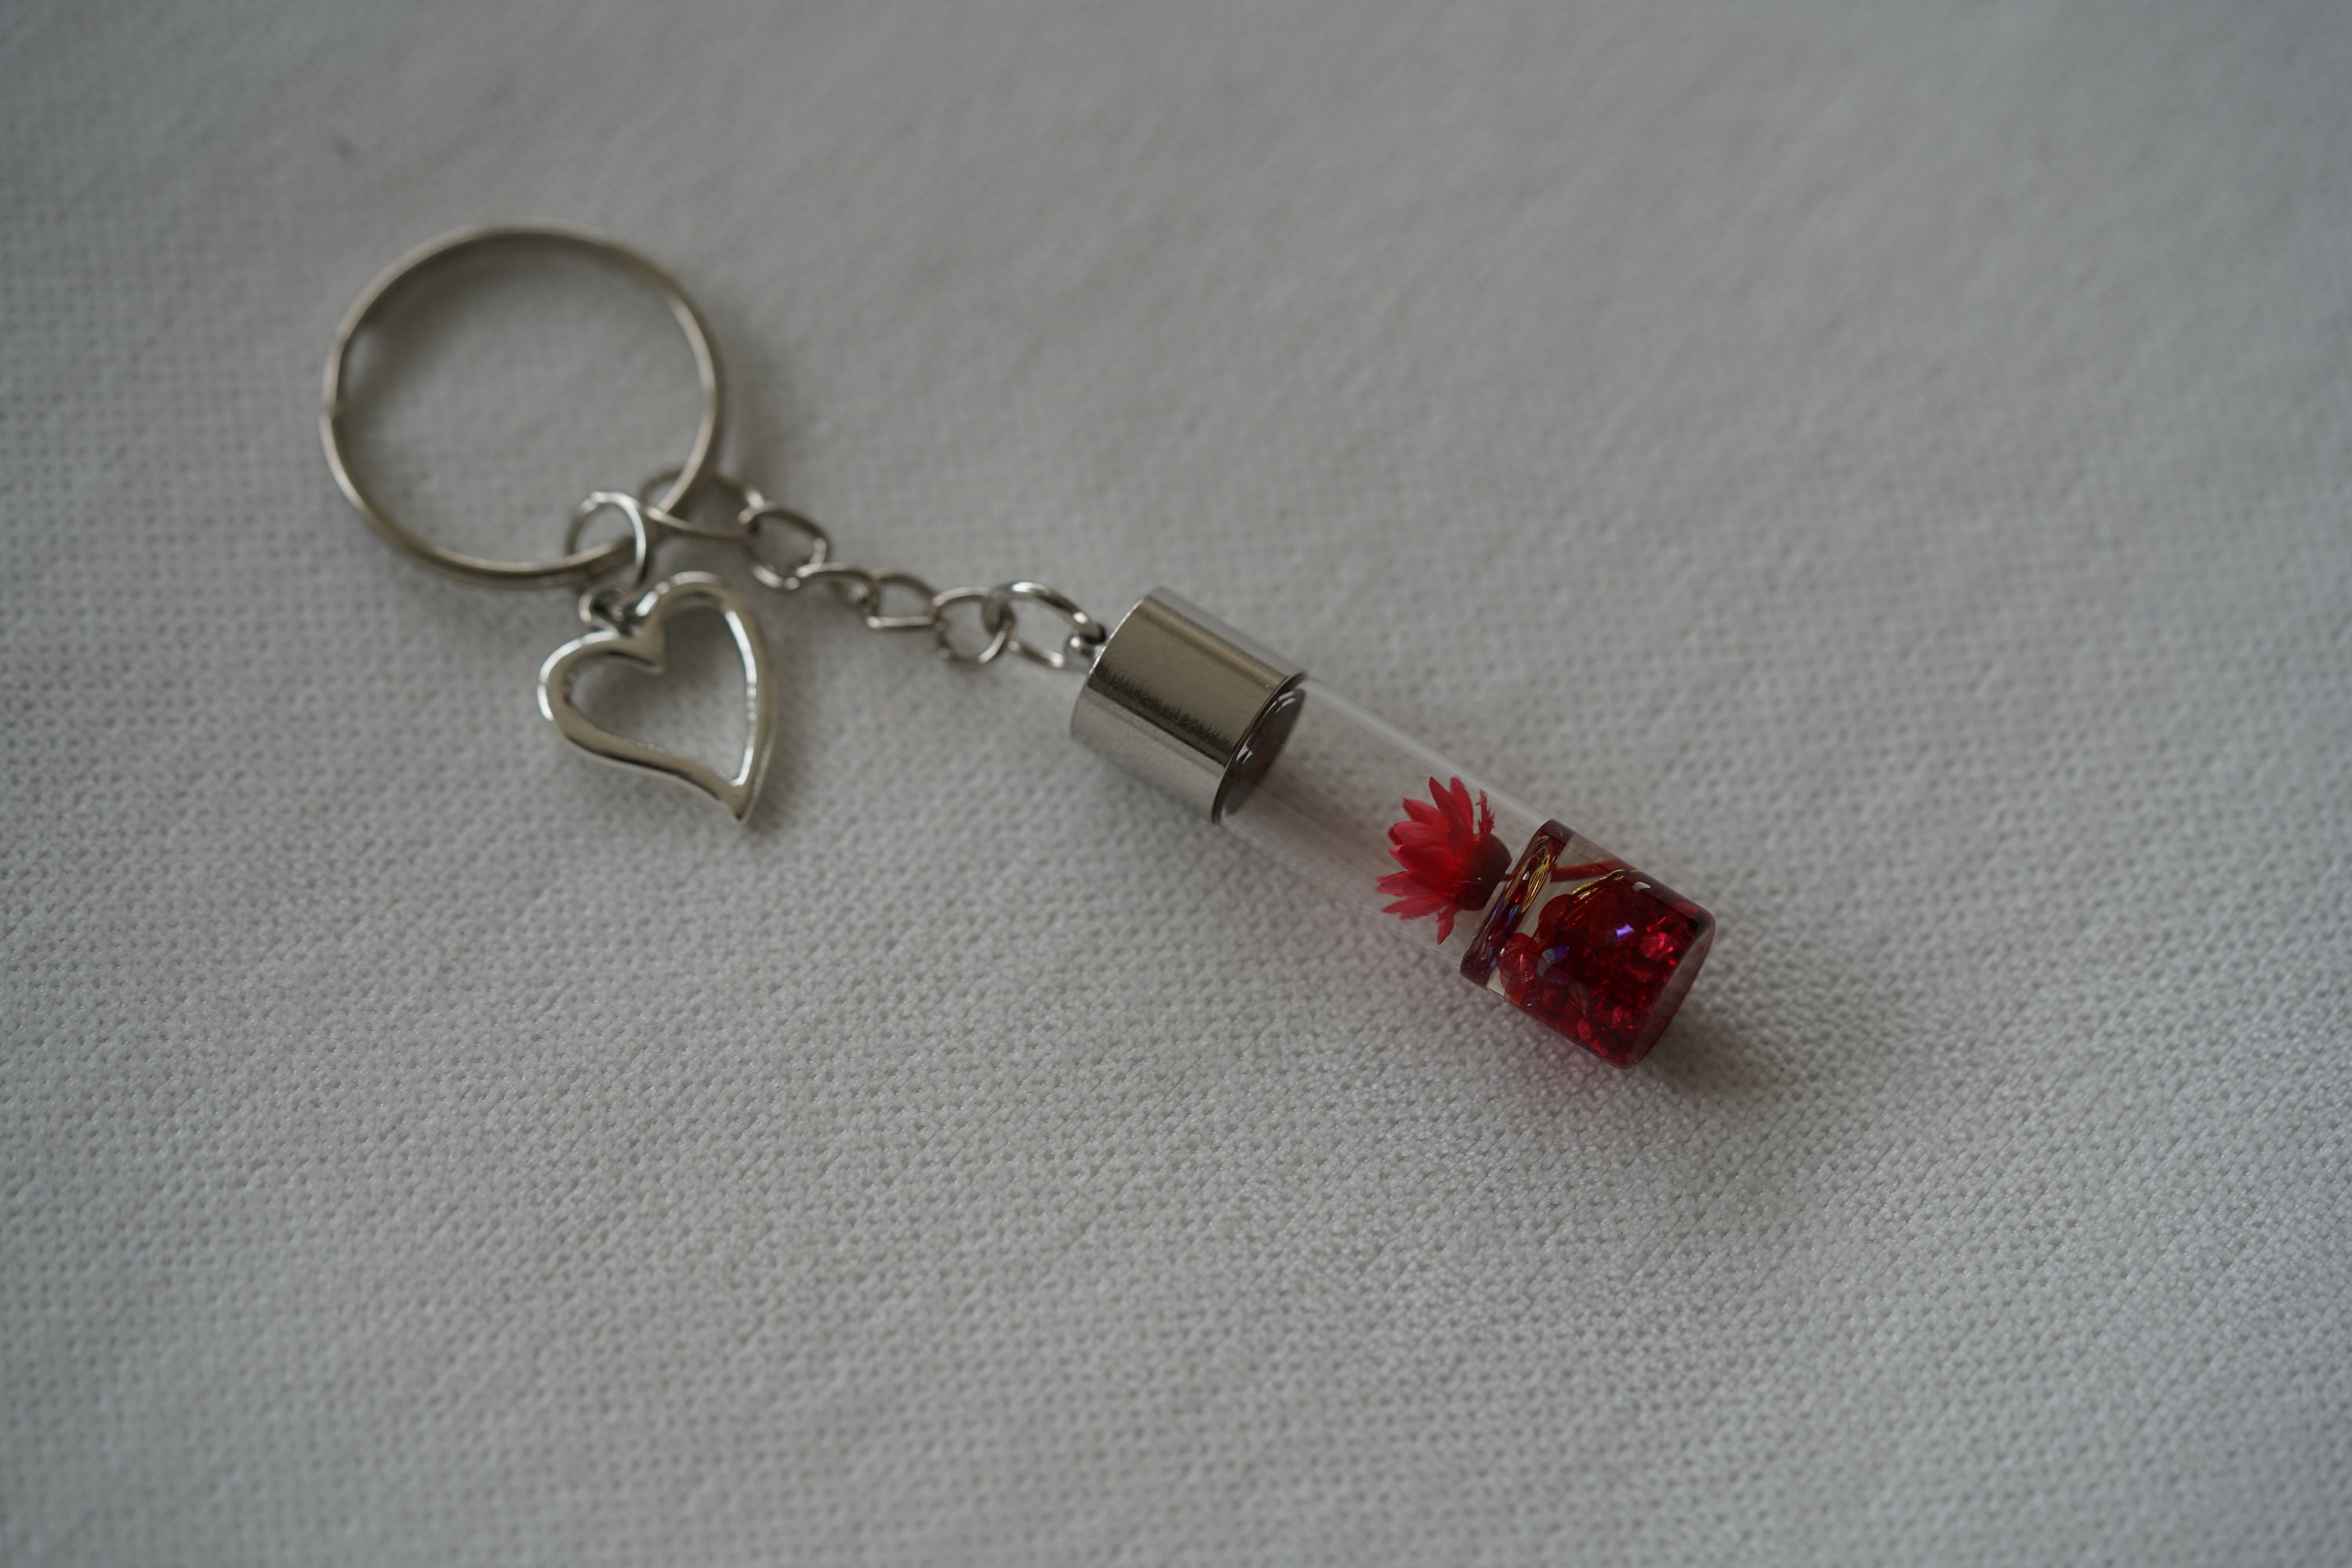 Yaihsuy Cute Flower Keychain Charms,Bag Purse Charms for Handbags,Car Keys Key Chain Accessories for Women Girls